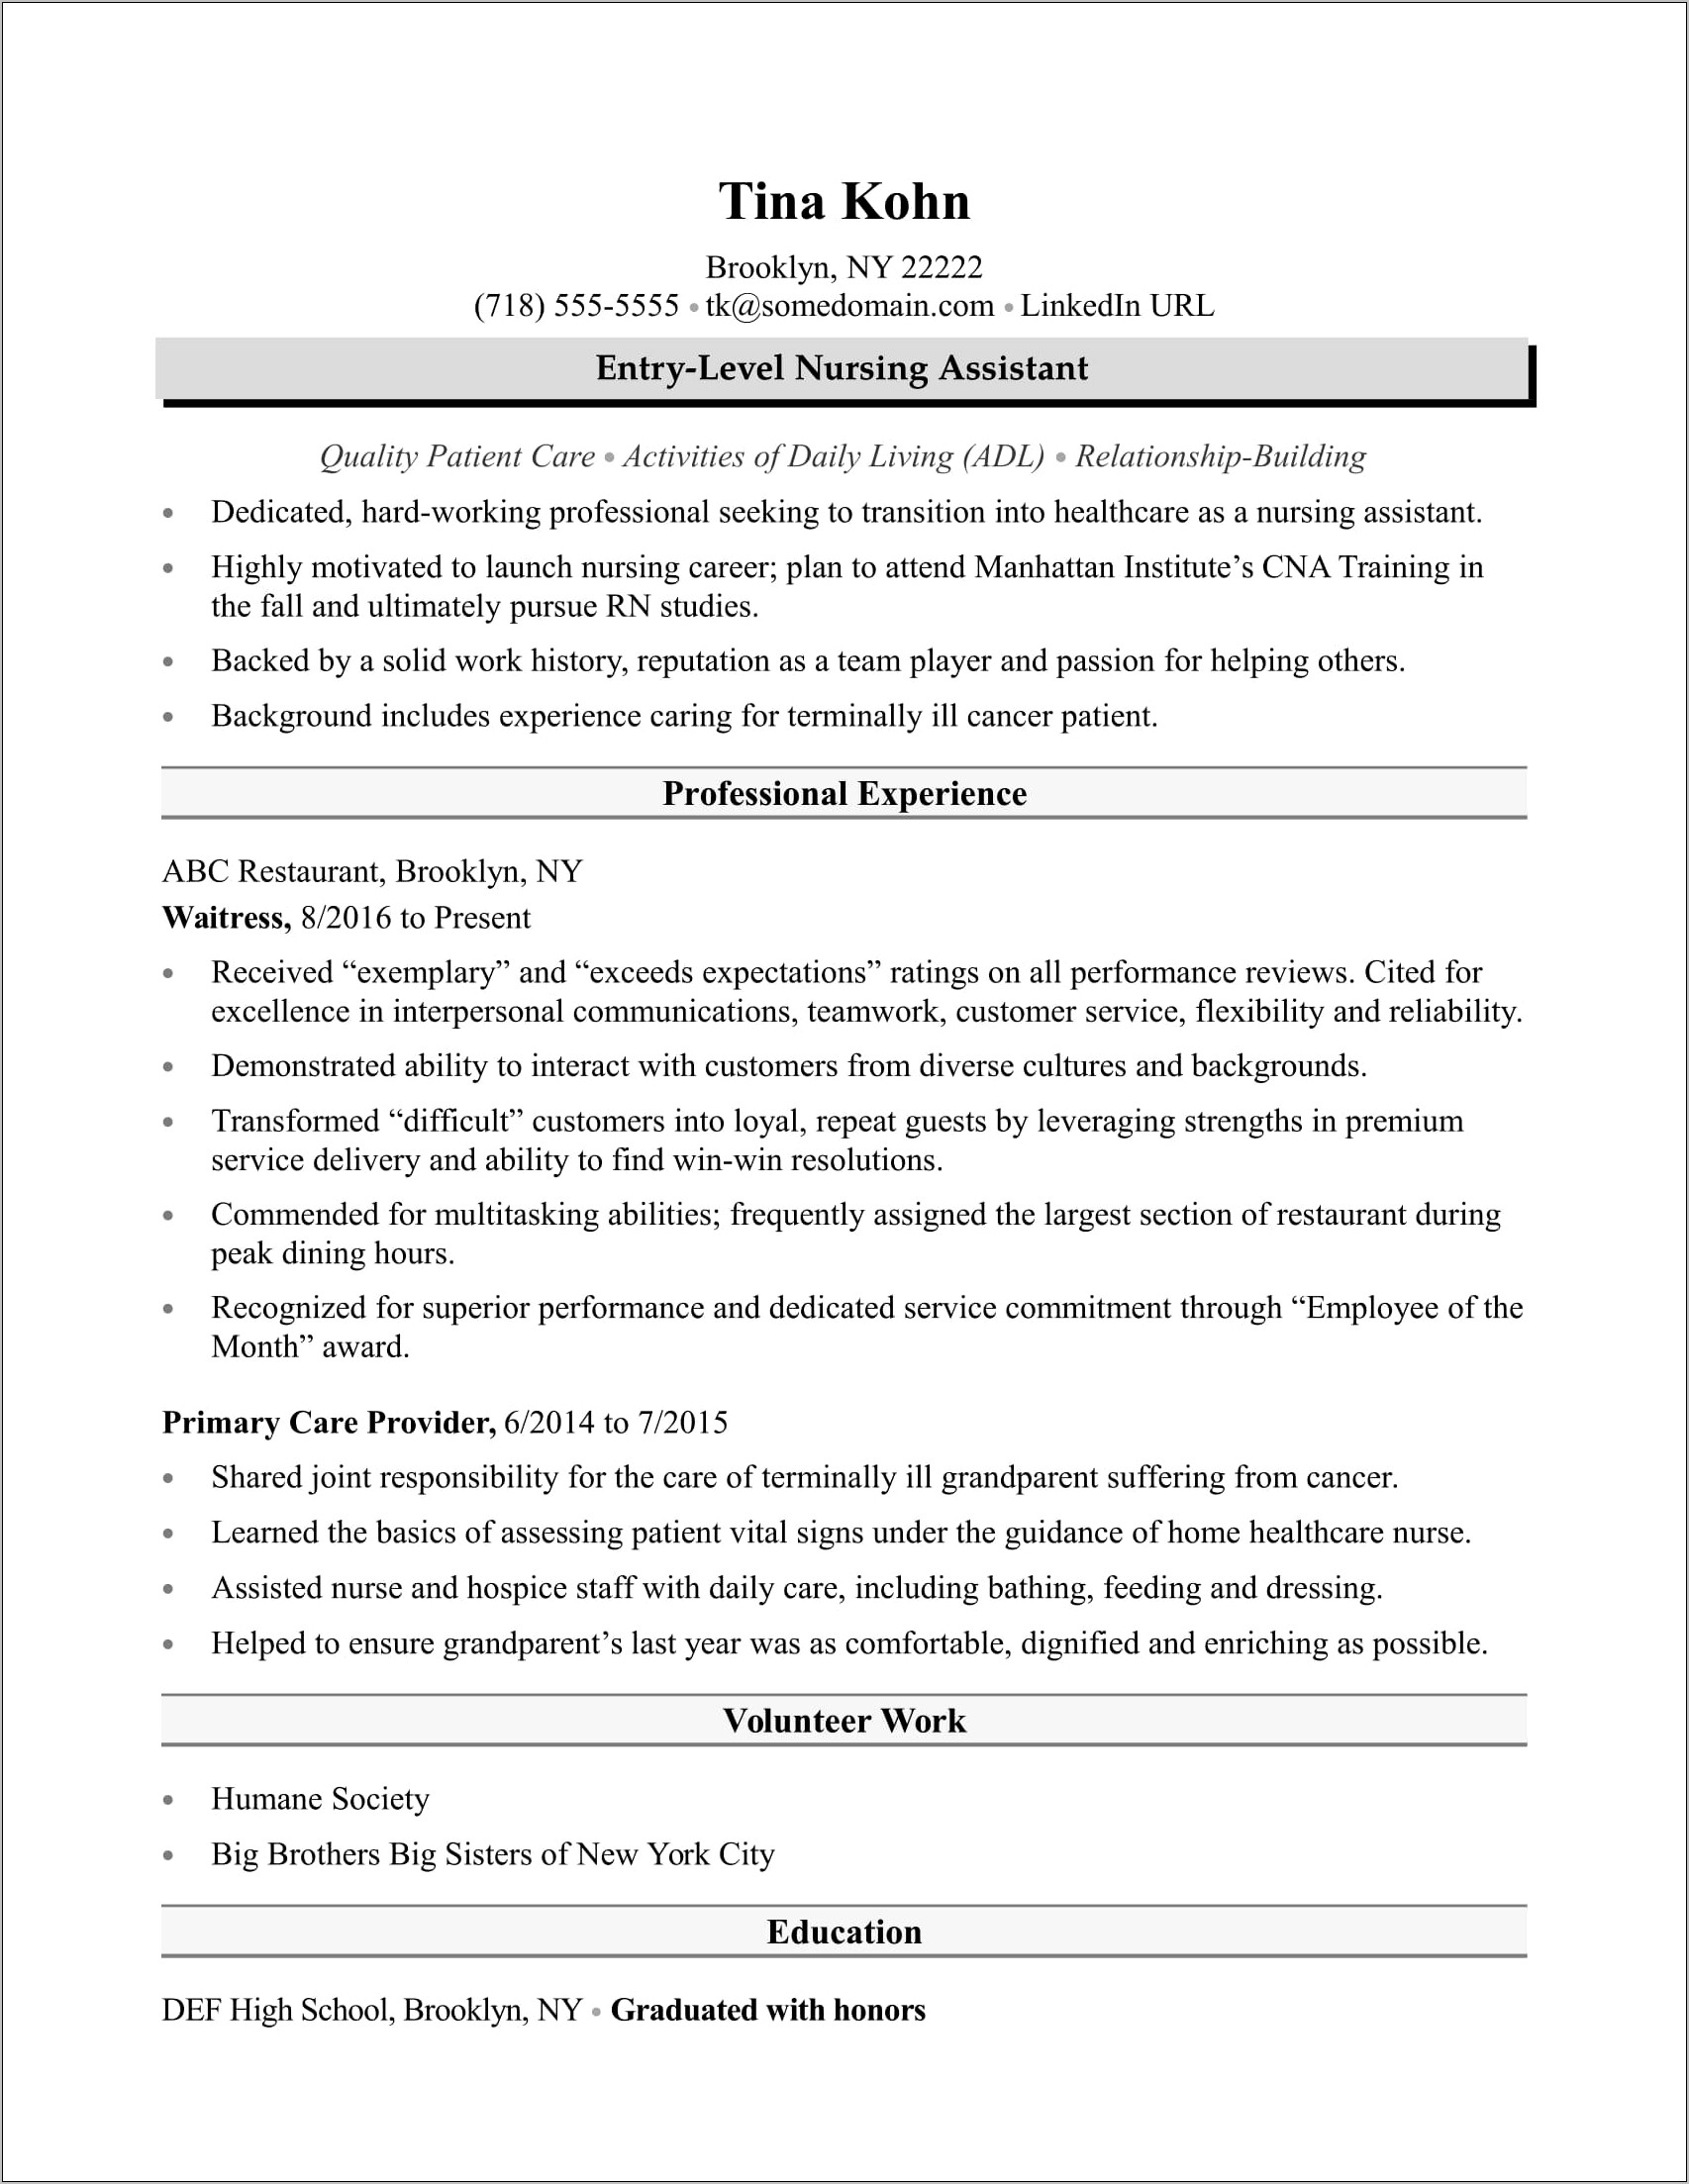 Resume Objective For Entry Level Nurse